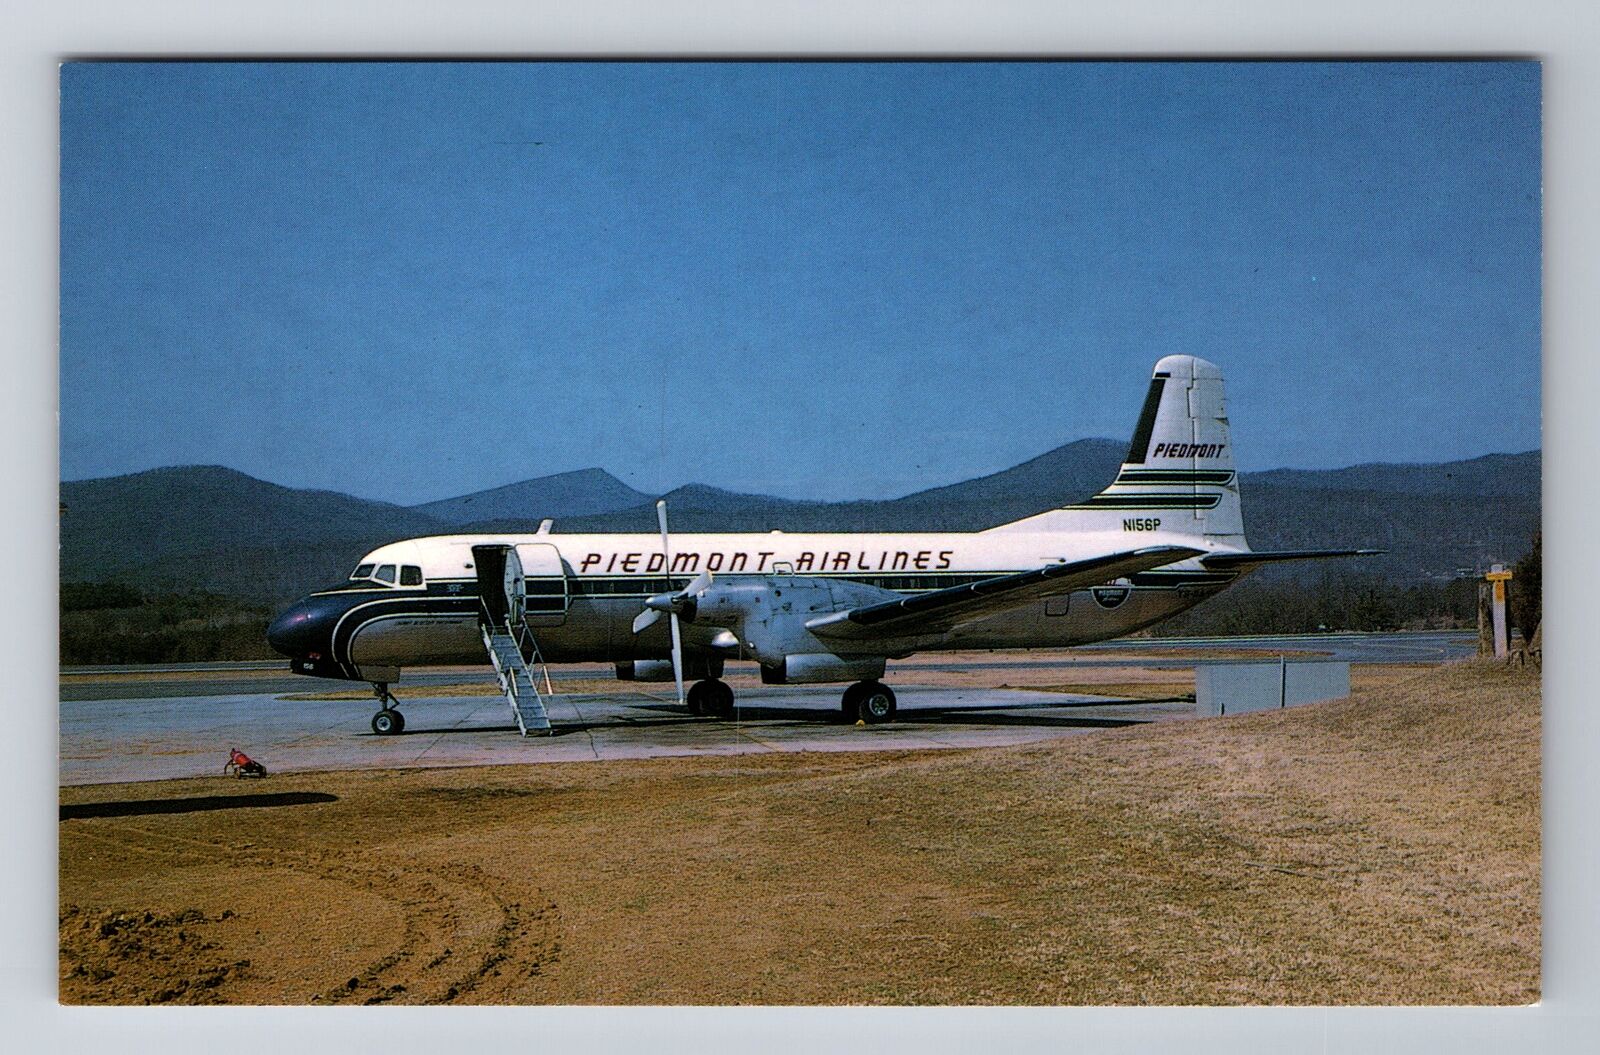 Roanoke VA-Virginia, Piedmont Airlines, YS-11A Transportation Vintage Postcard